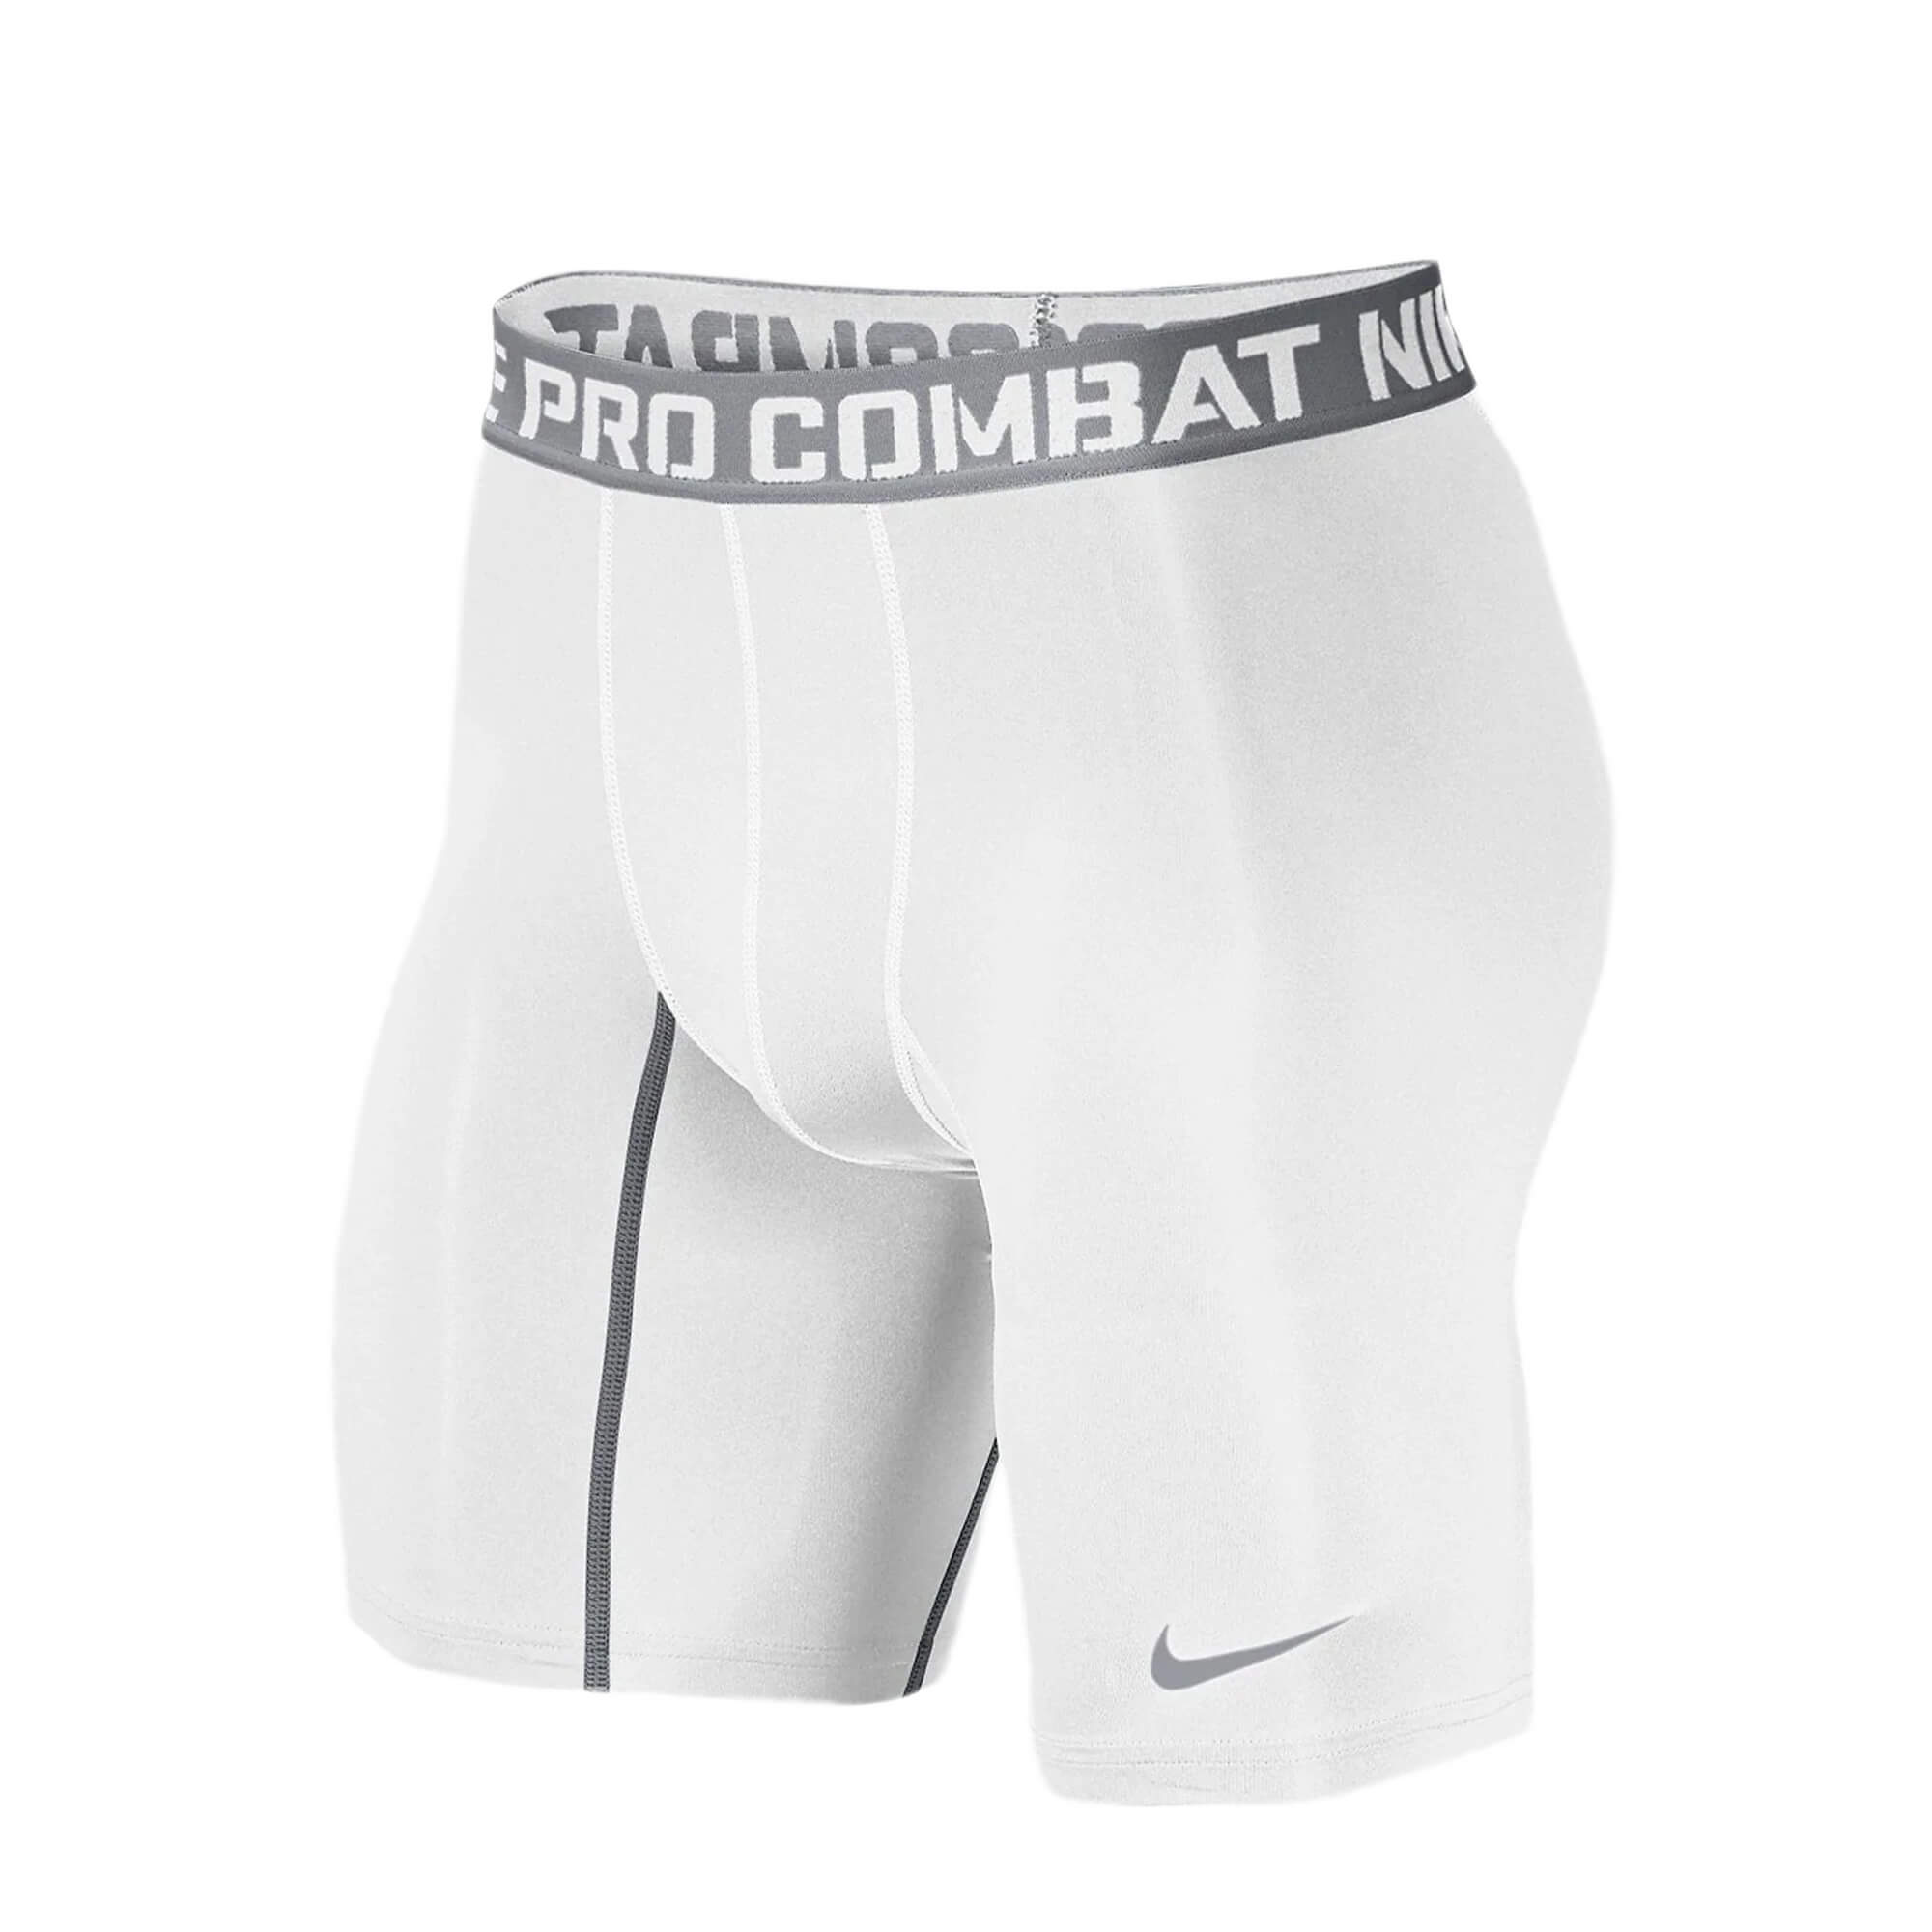 Nike Men's Combat Tights Shorts White/Grey